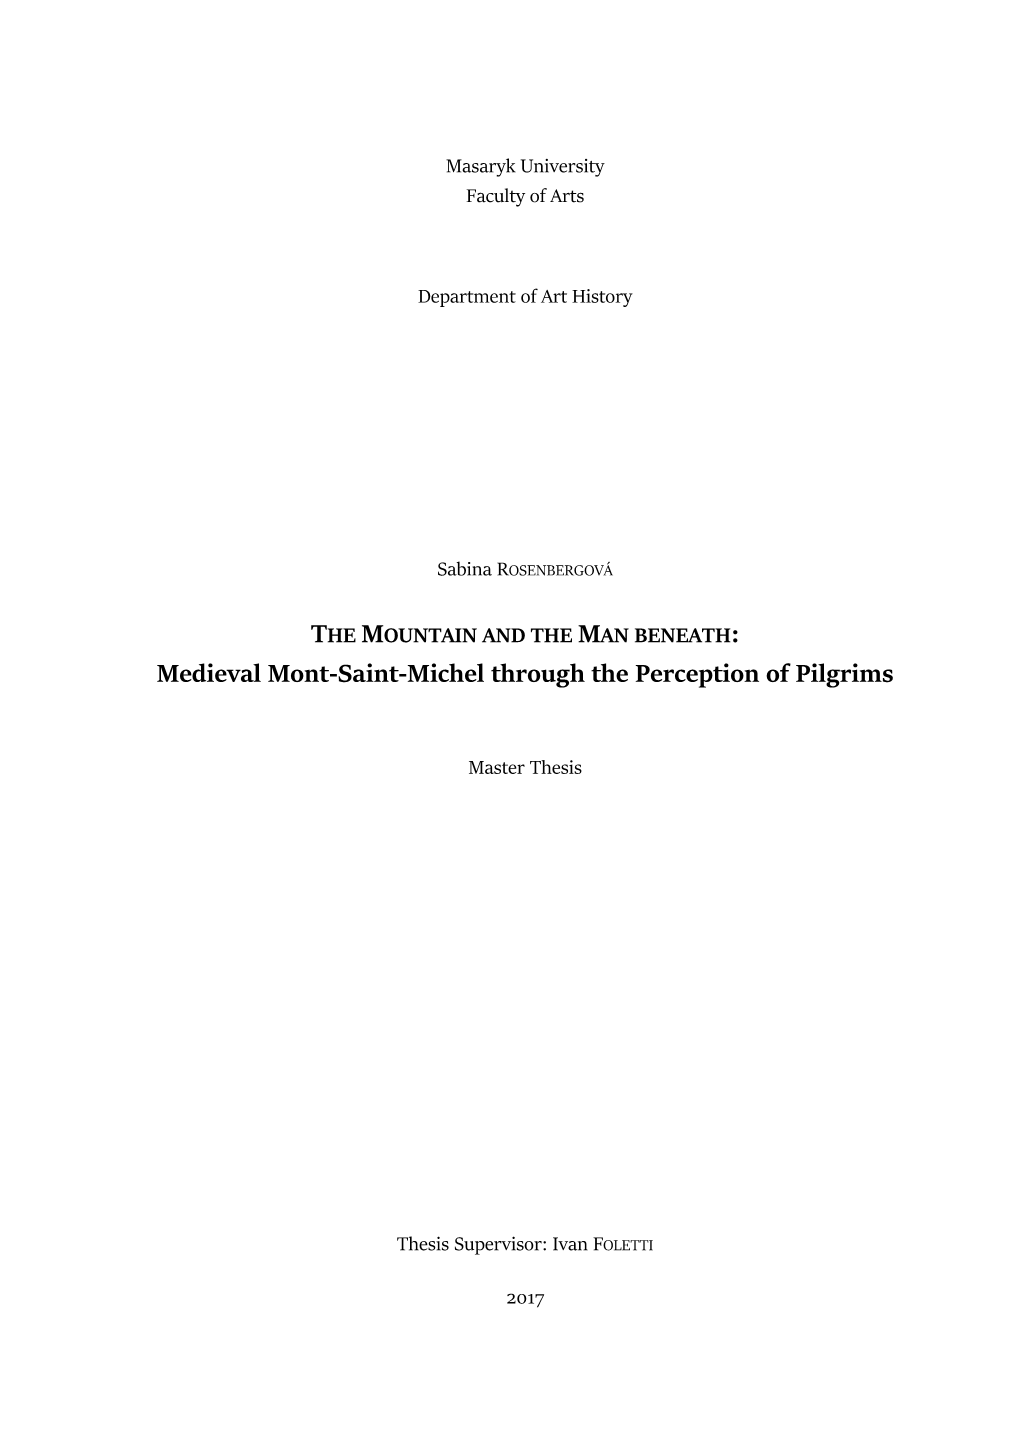 Medieval Mont-Saint-Michel Through the Perception of Pilgrims